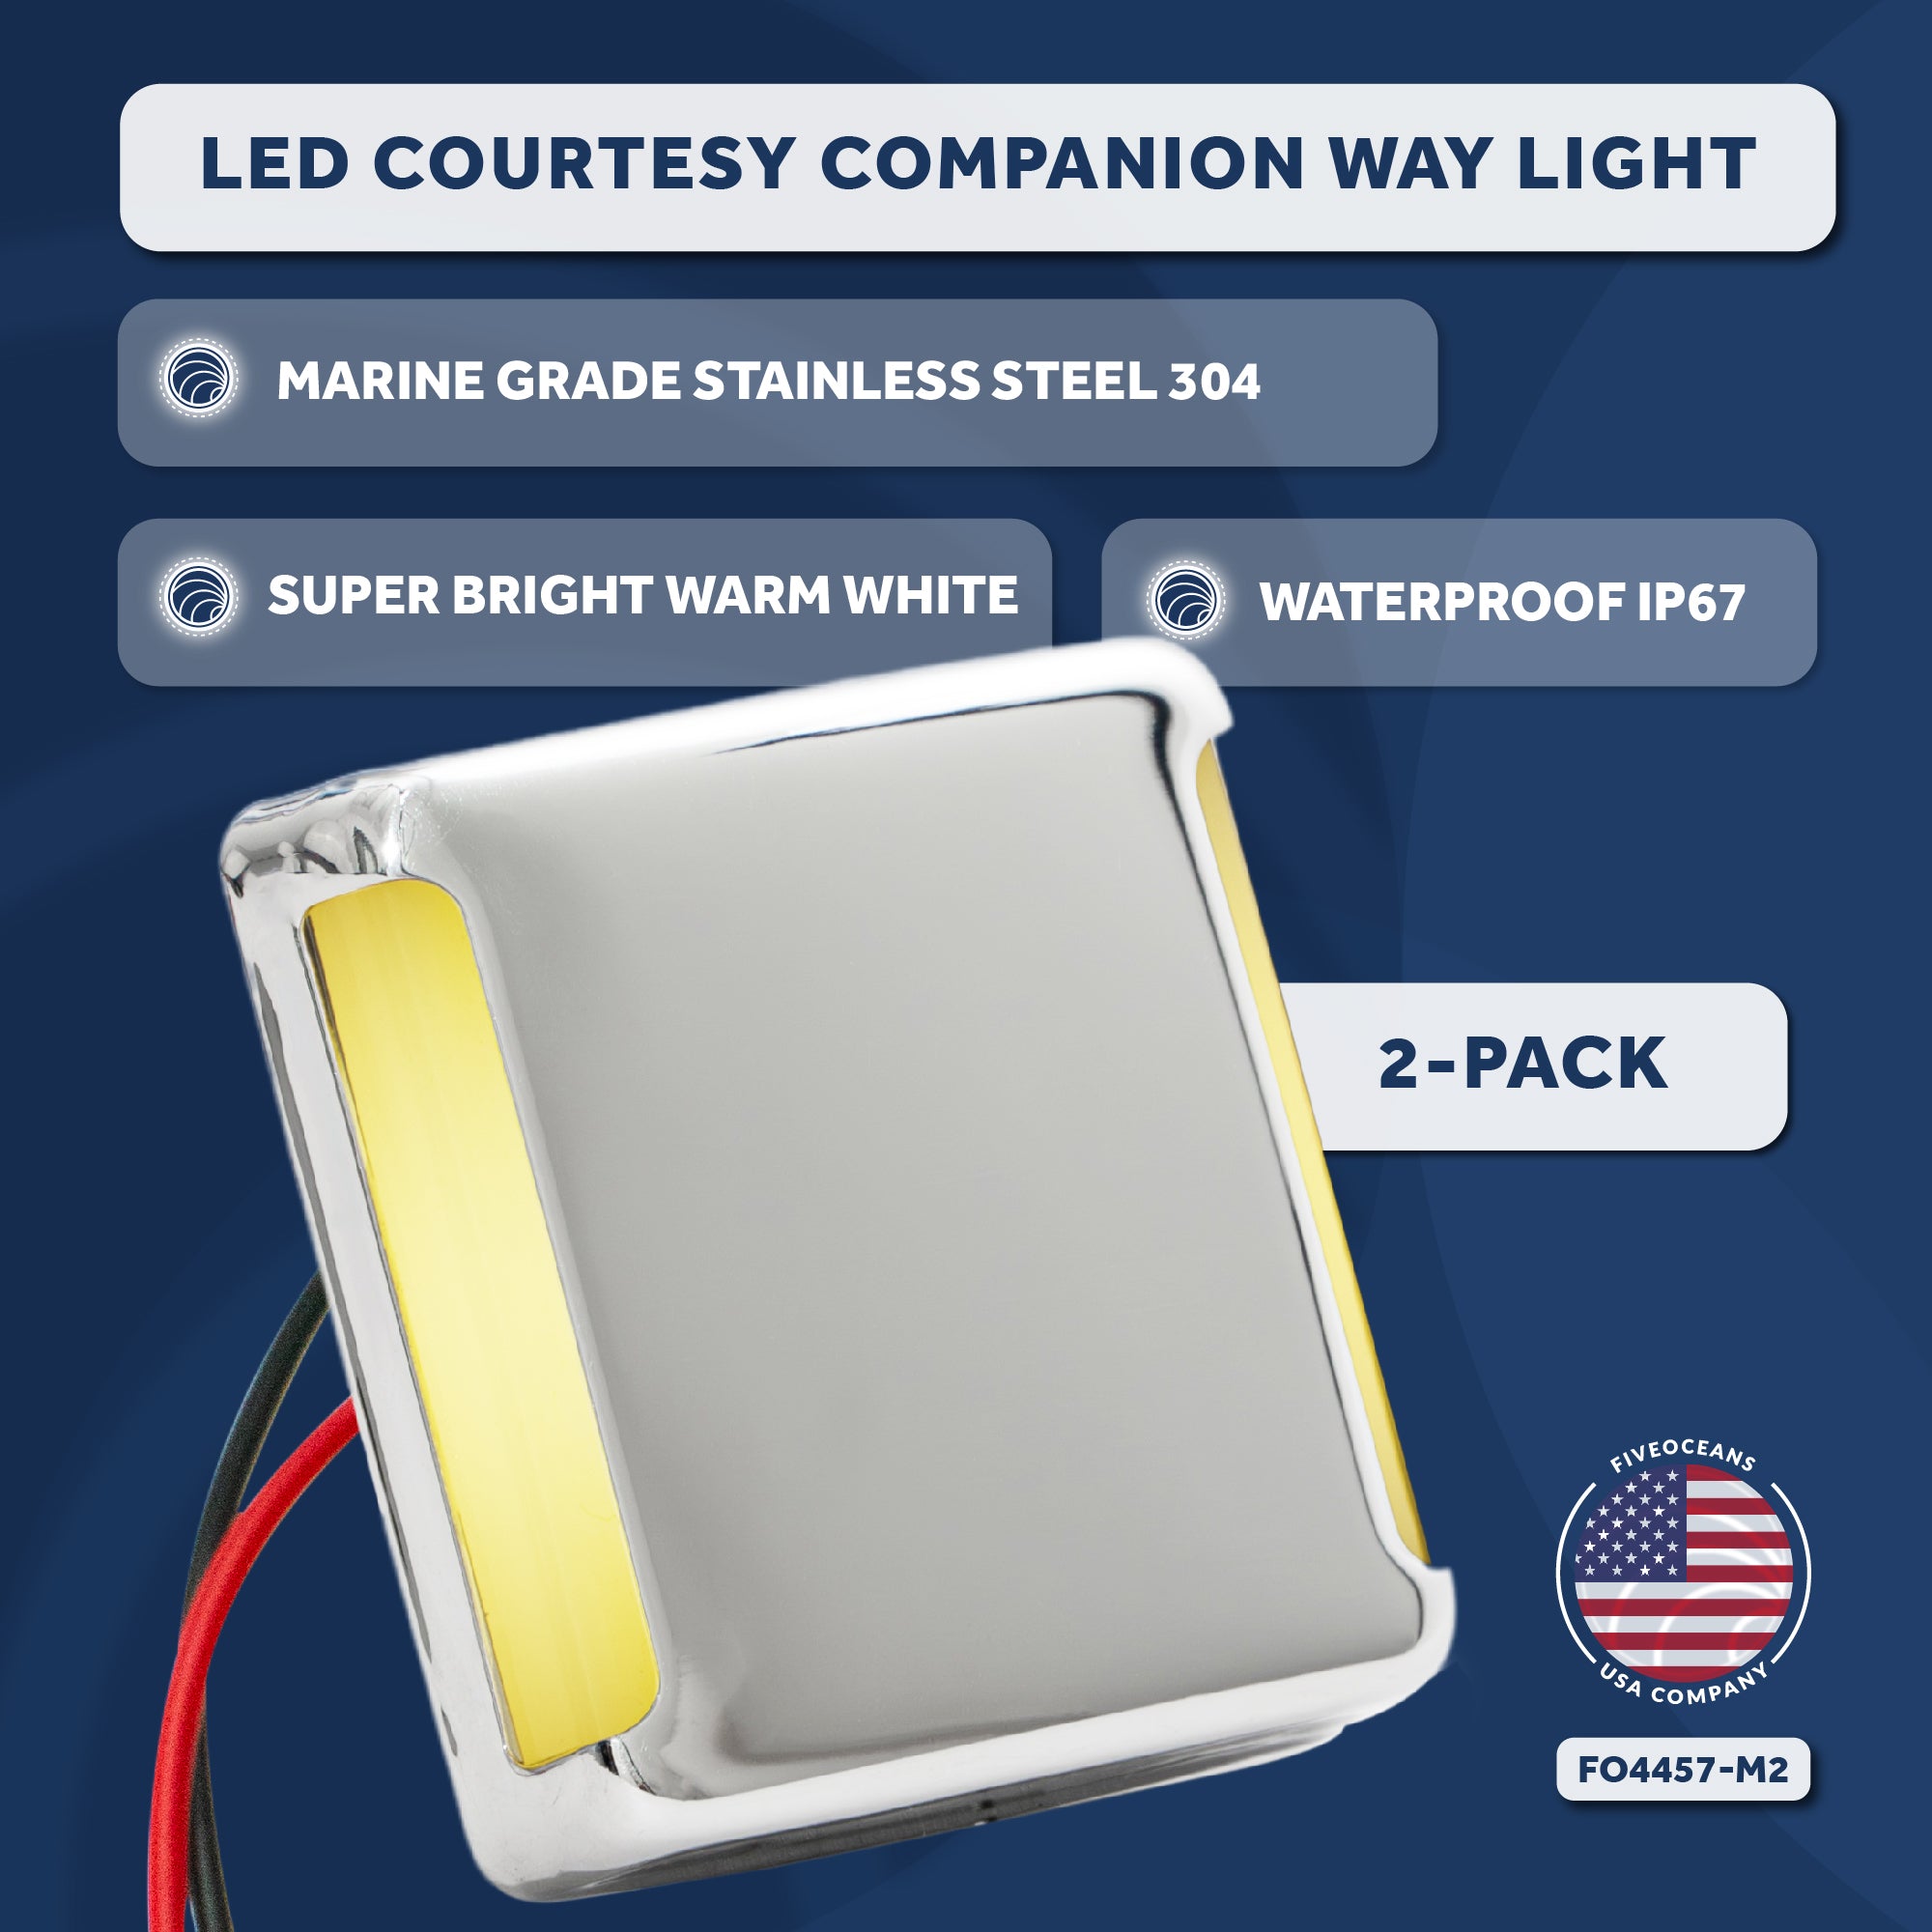 LED Courtesy Companion Way Light, Square, Warm White, 2-Pack - FO4457-M2